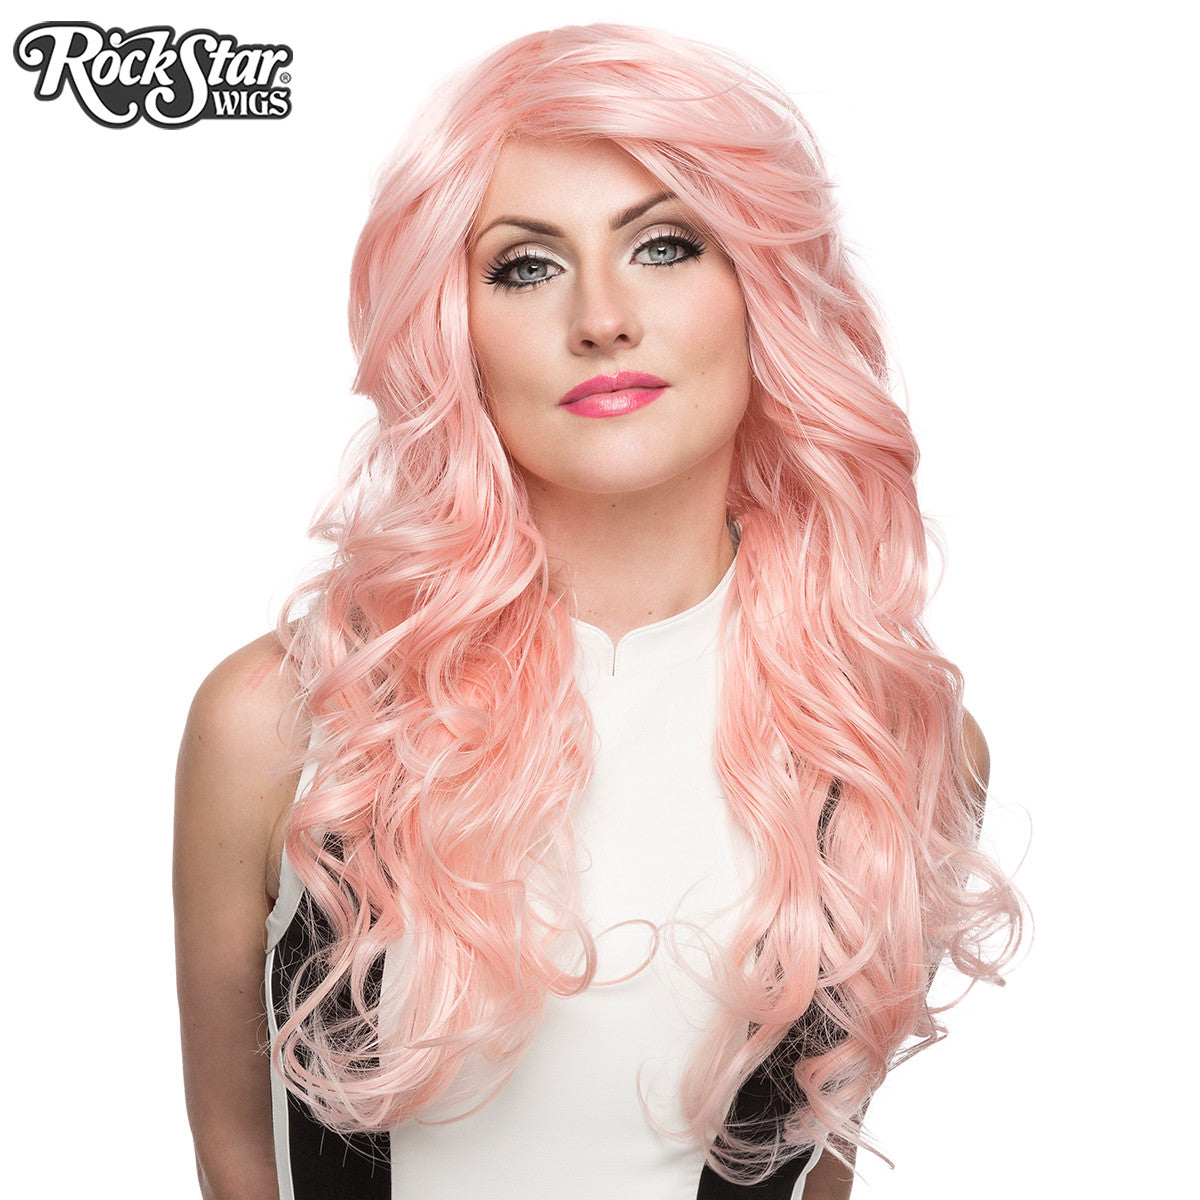 rockstar wigs review